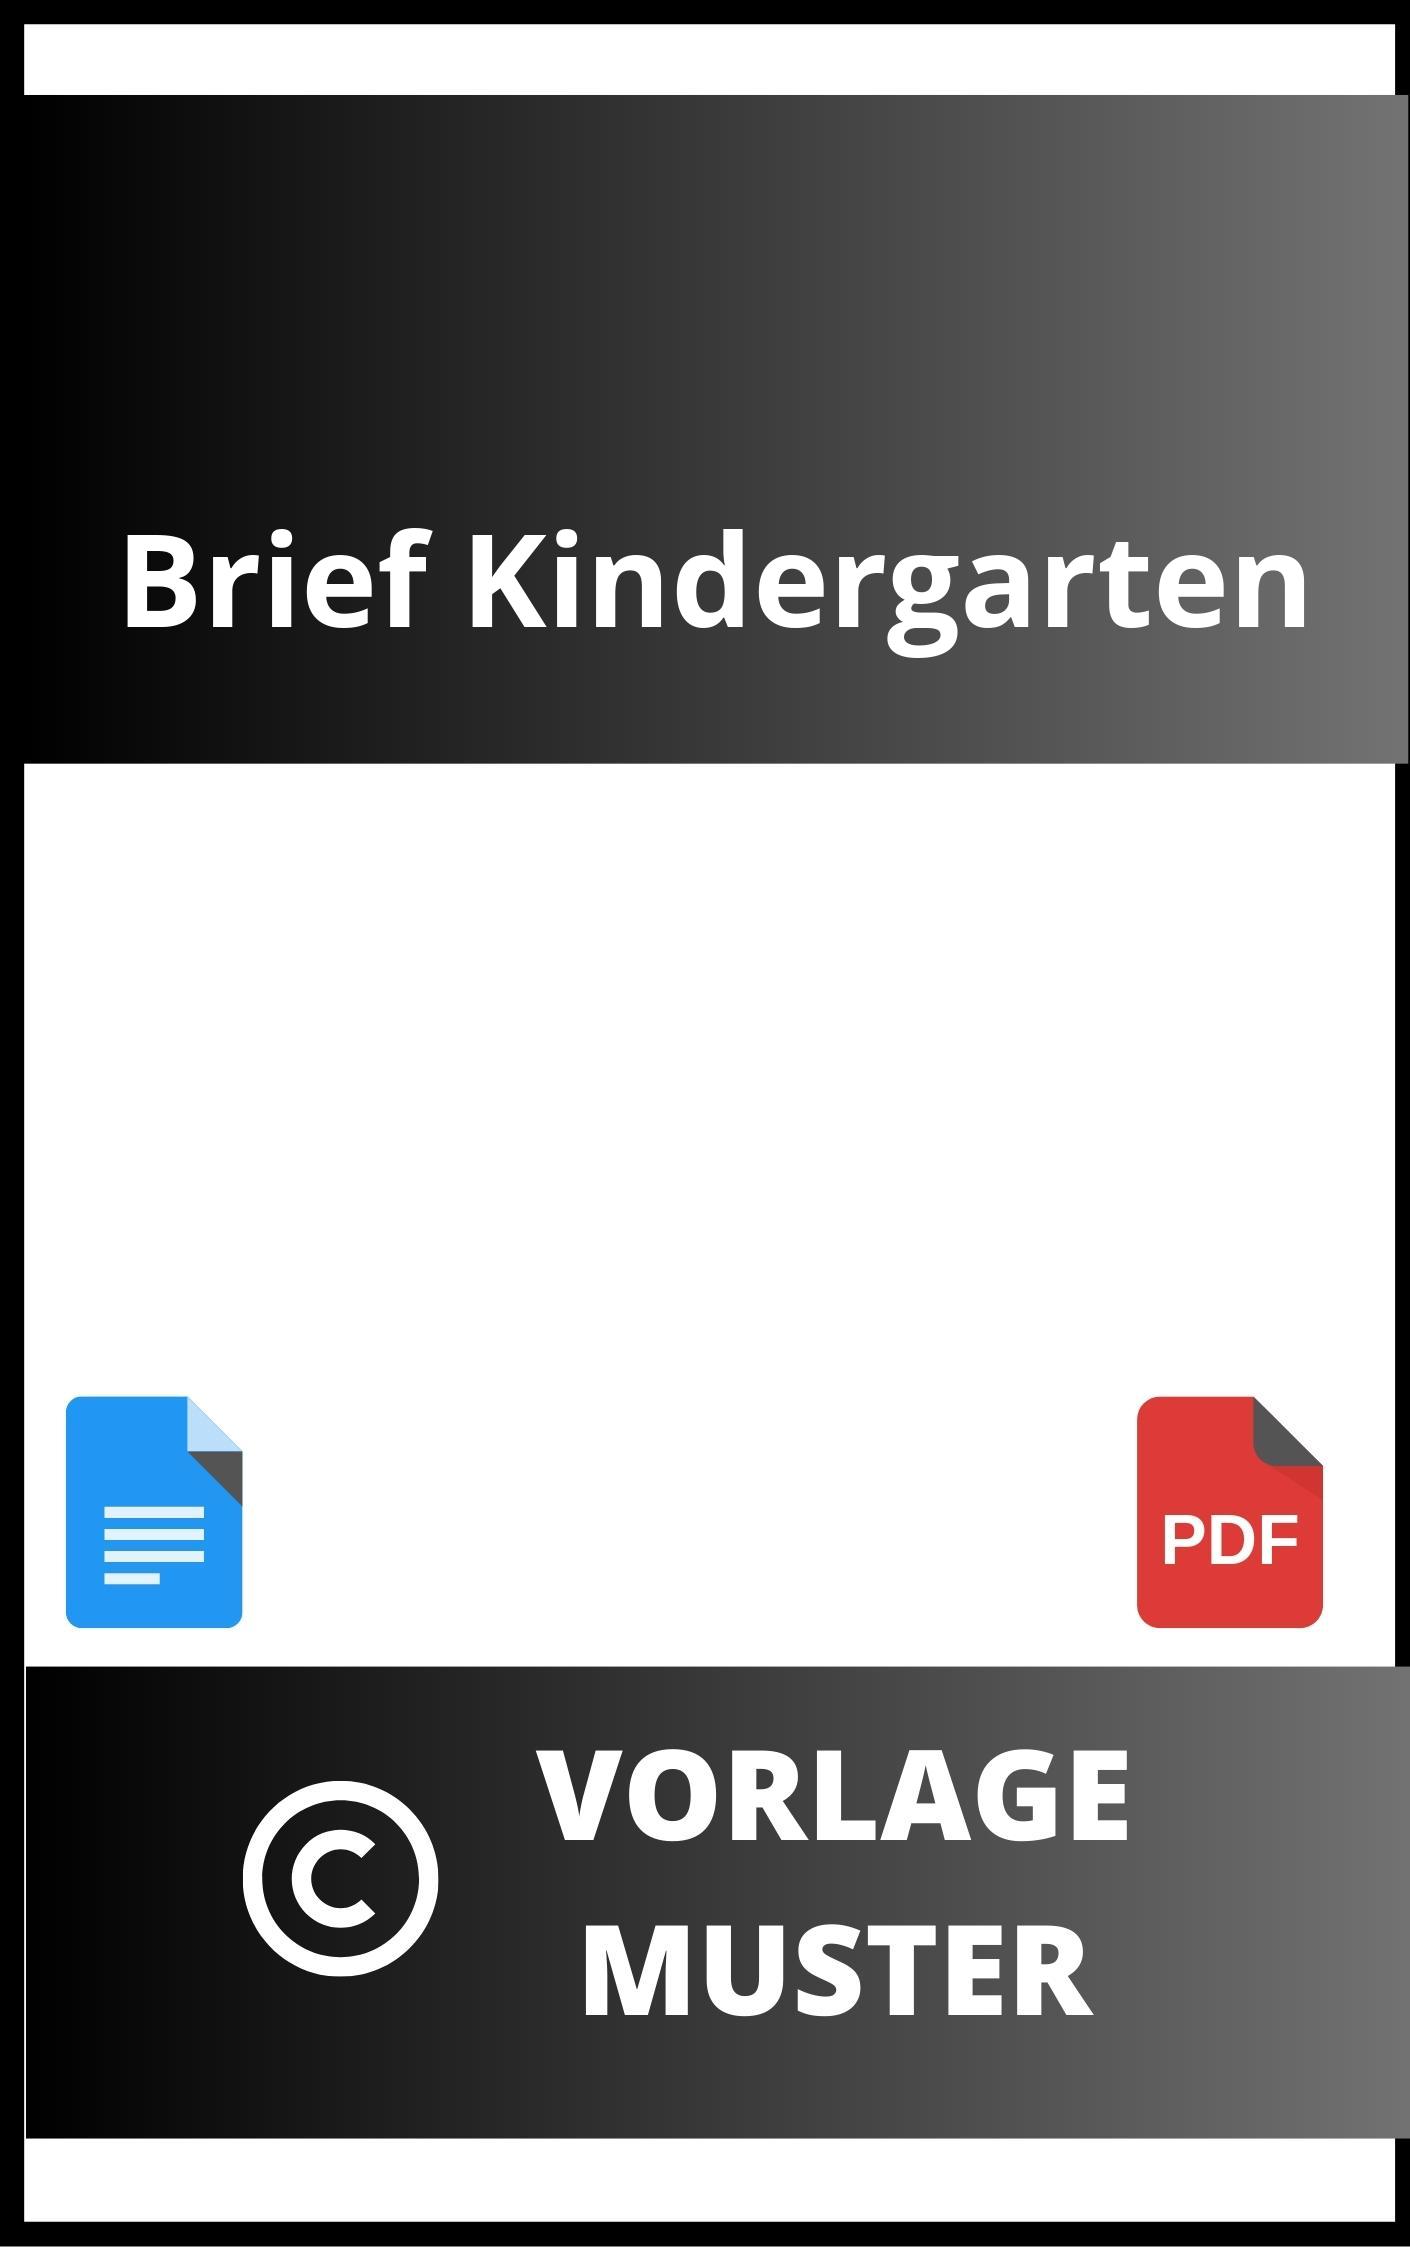 Brief Kindergarten